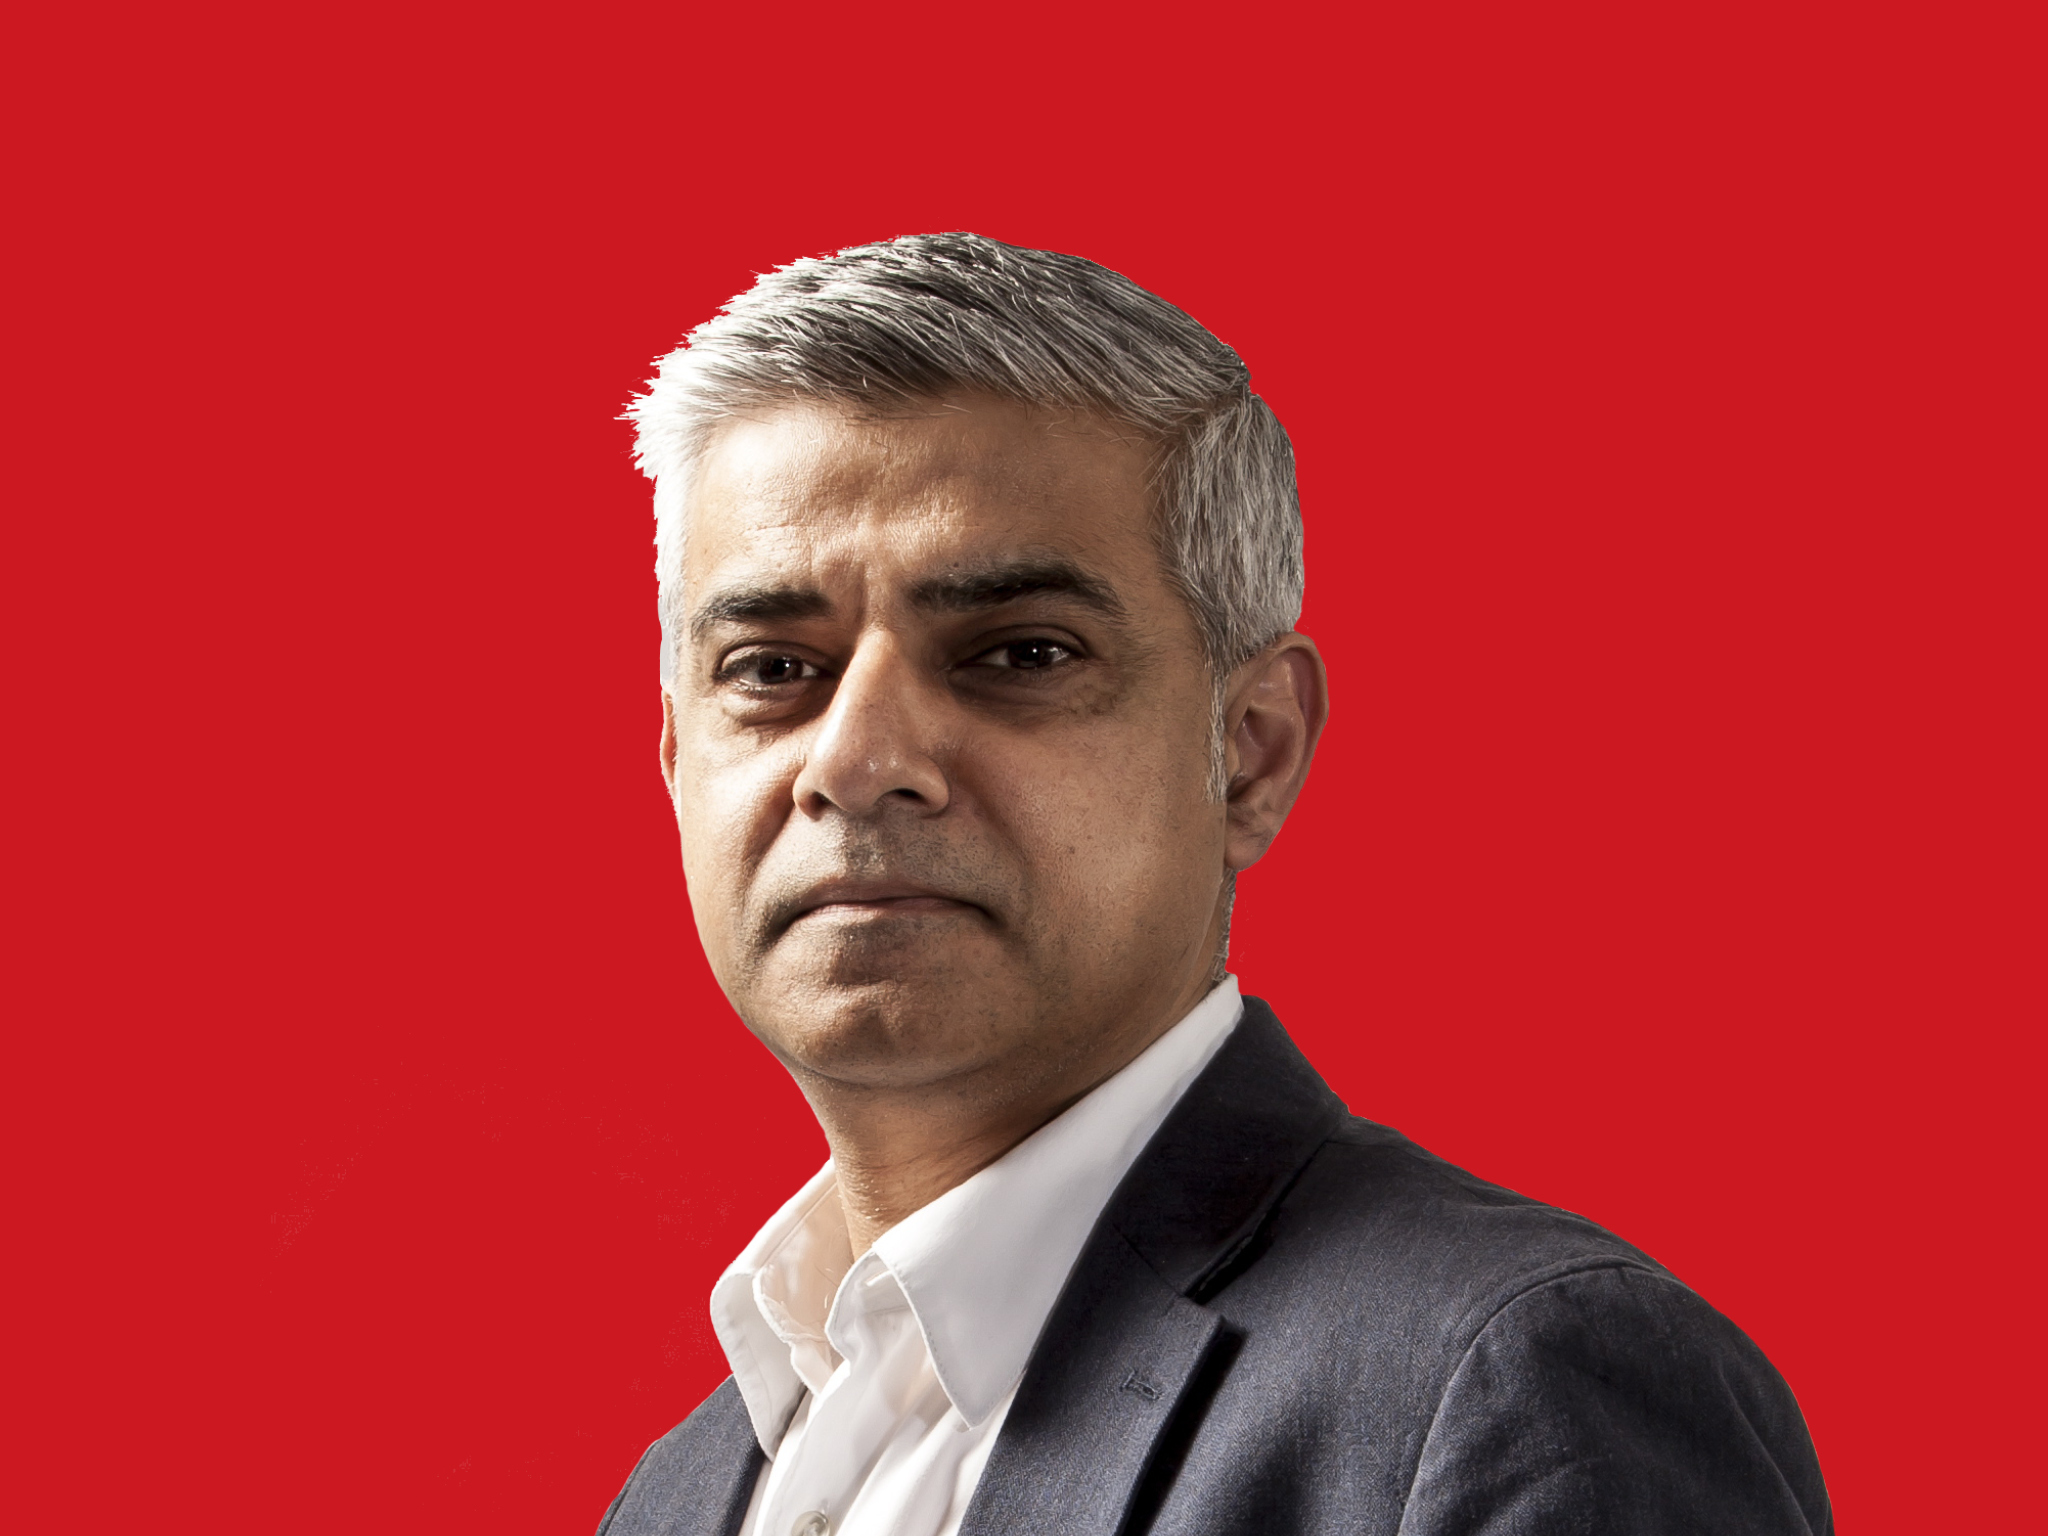 Sadiq Khan is running for a historic third term as London Mayor